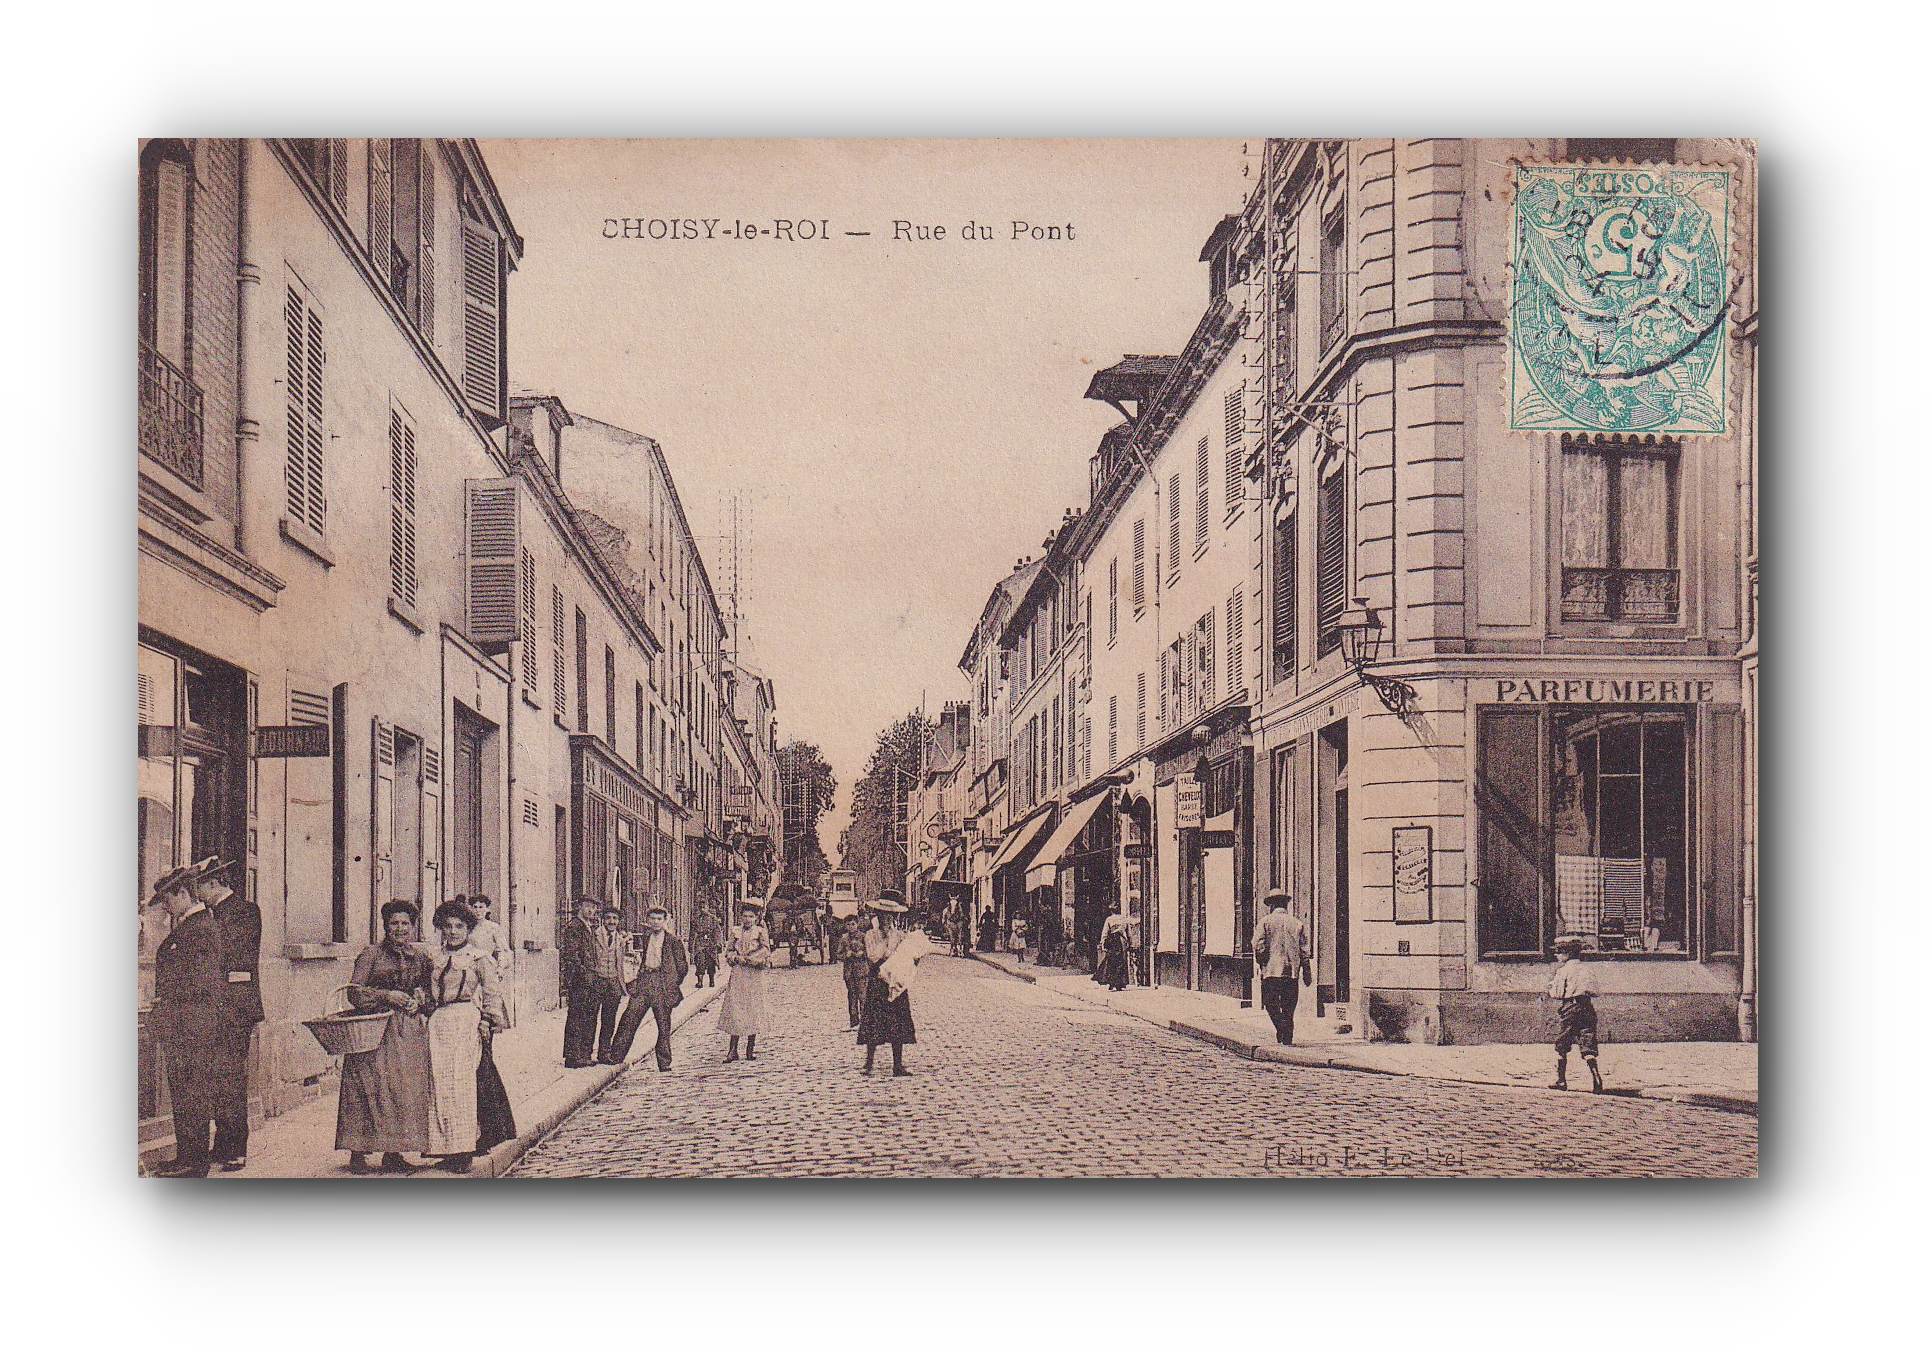 - CHOISY-le-ROI - Rue du Pont - 18.09.1904 -